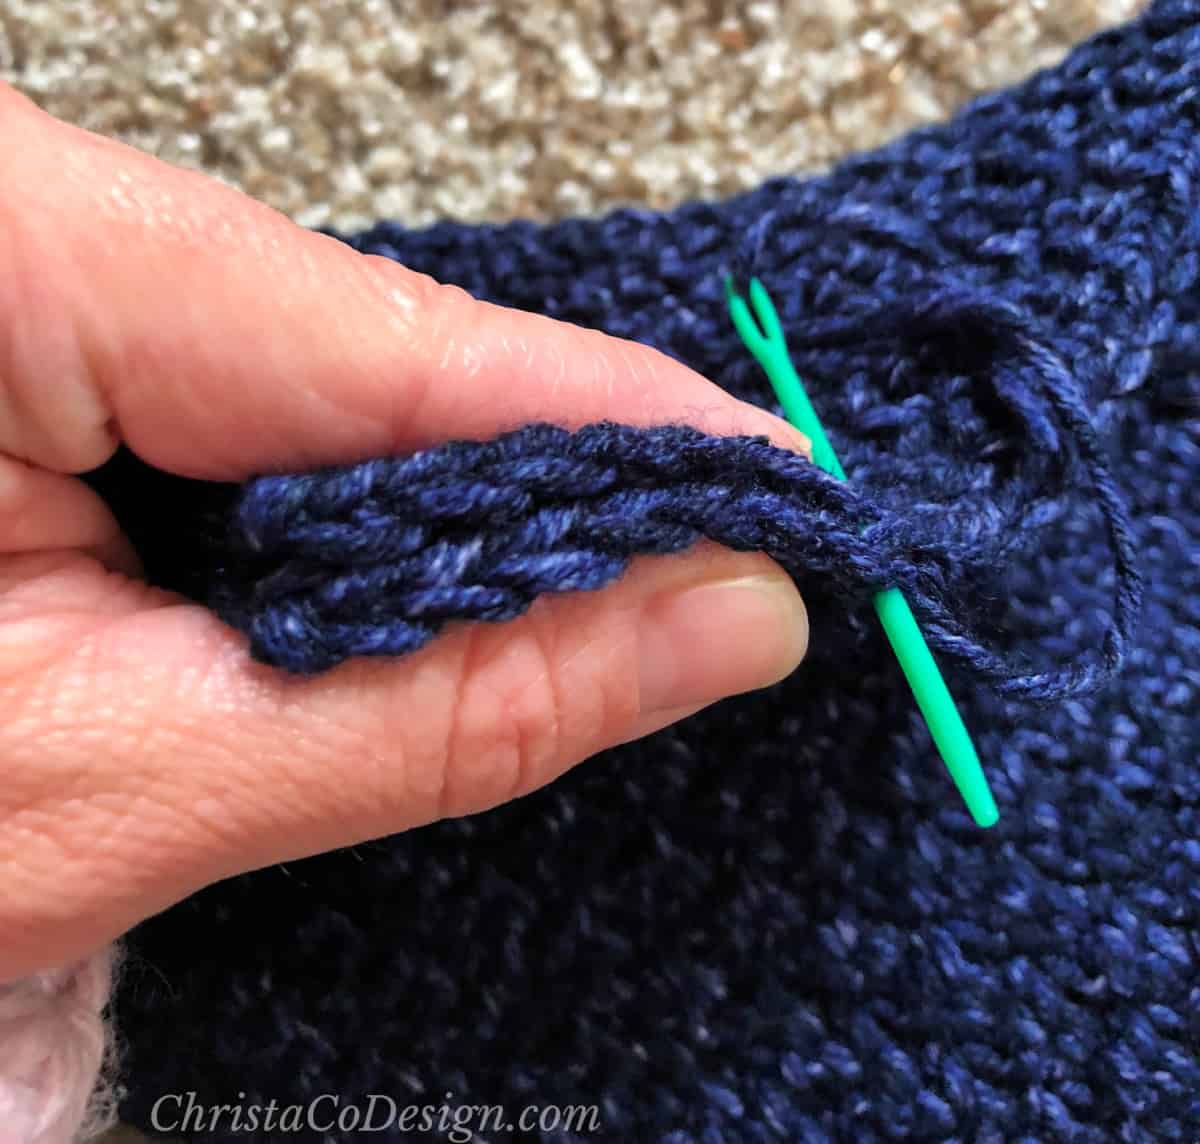 Sew stitch for stitch with green yarn needle.